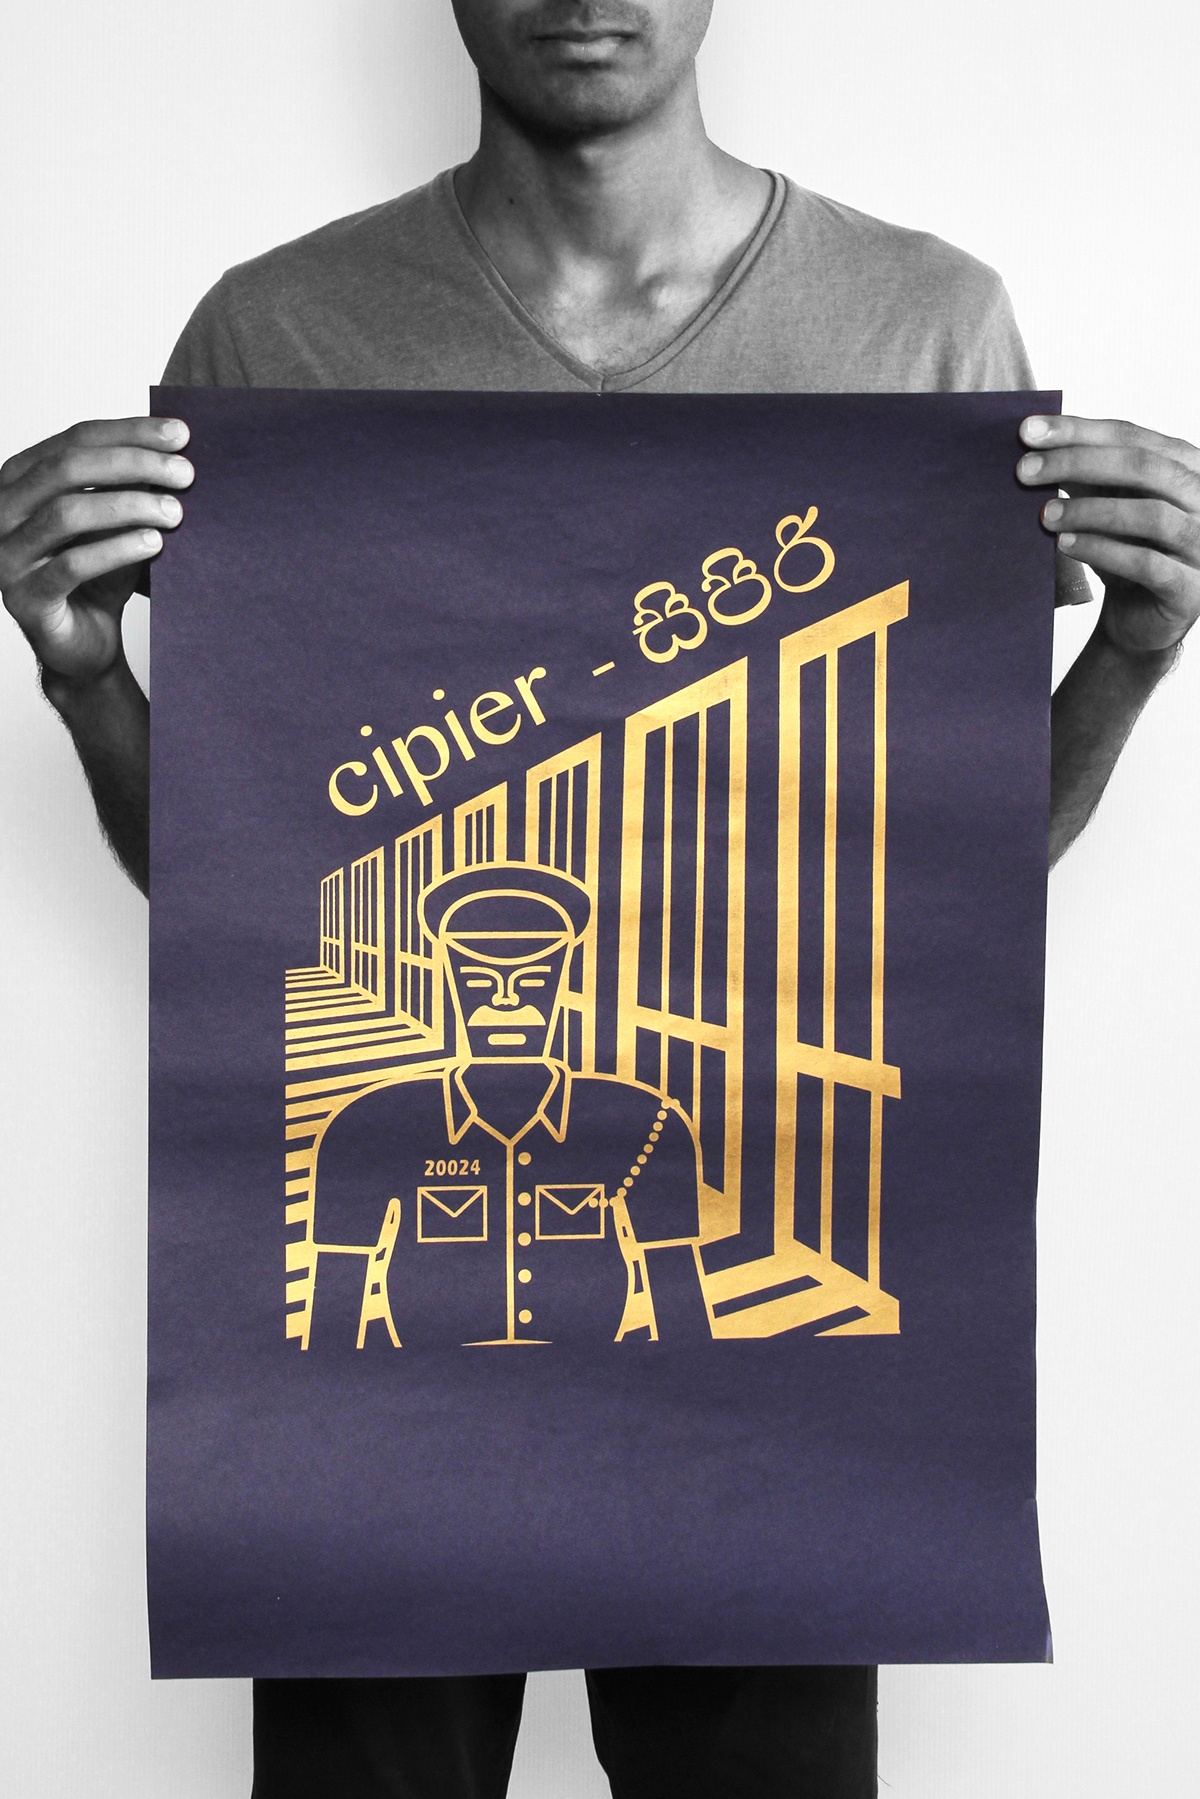 Screenprinting Sri lanka posters dutch cops police